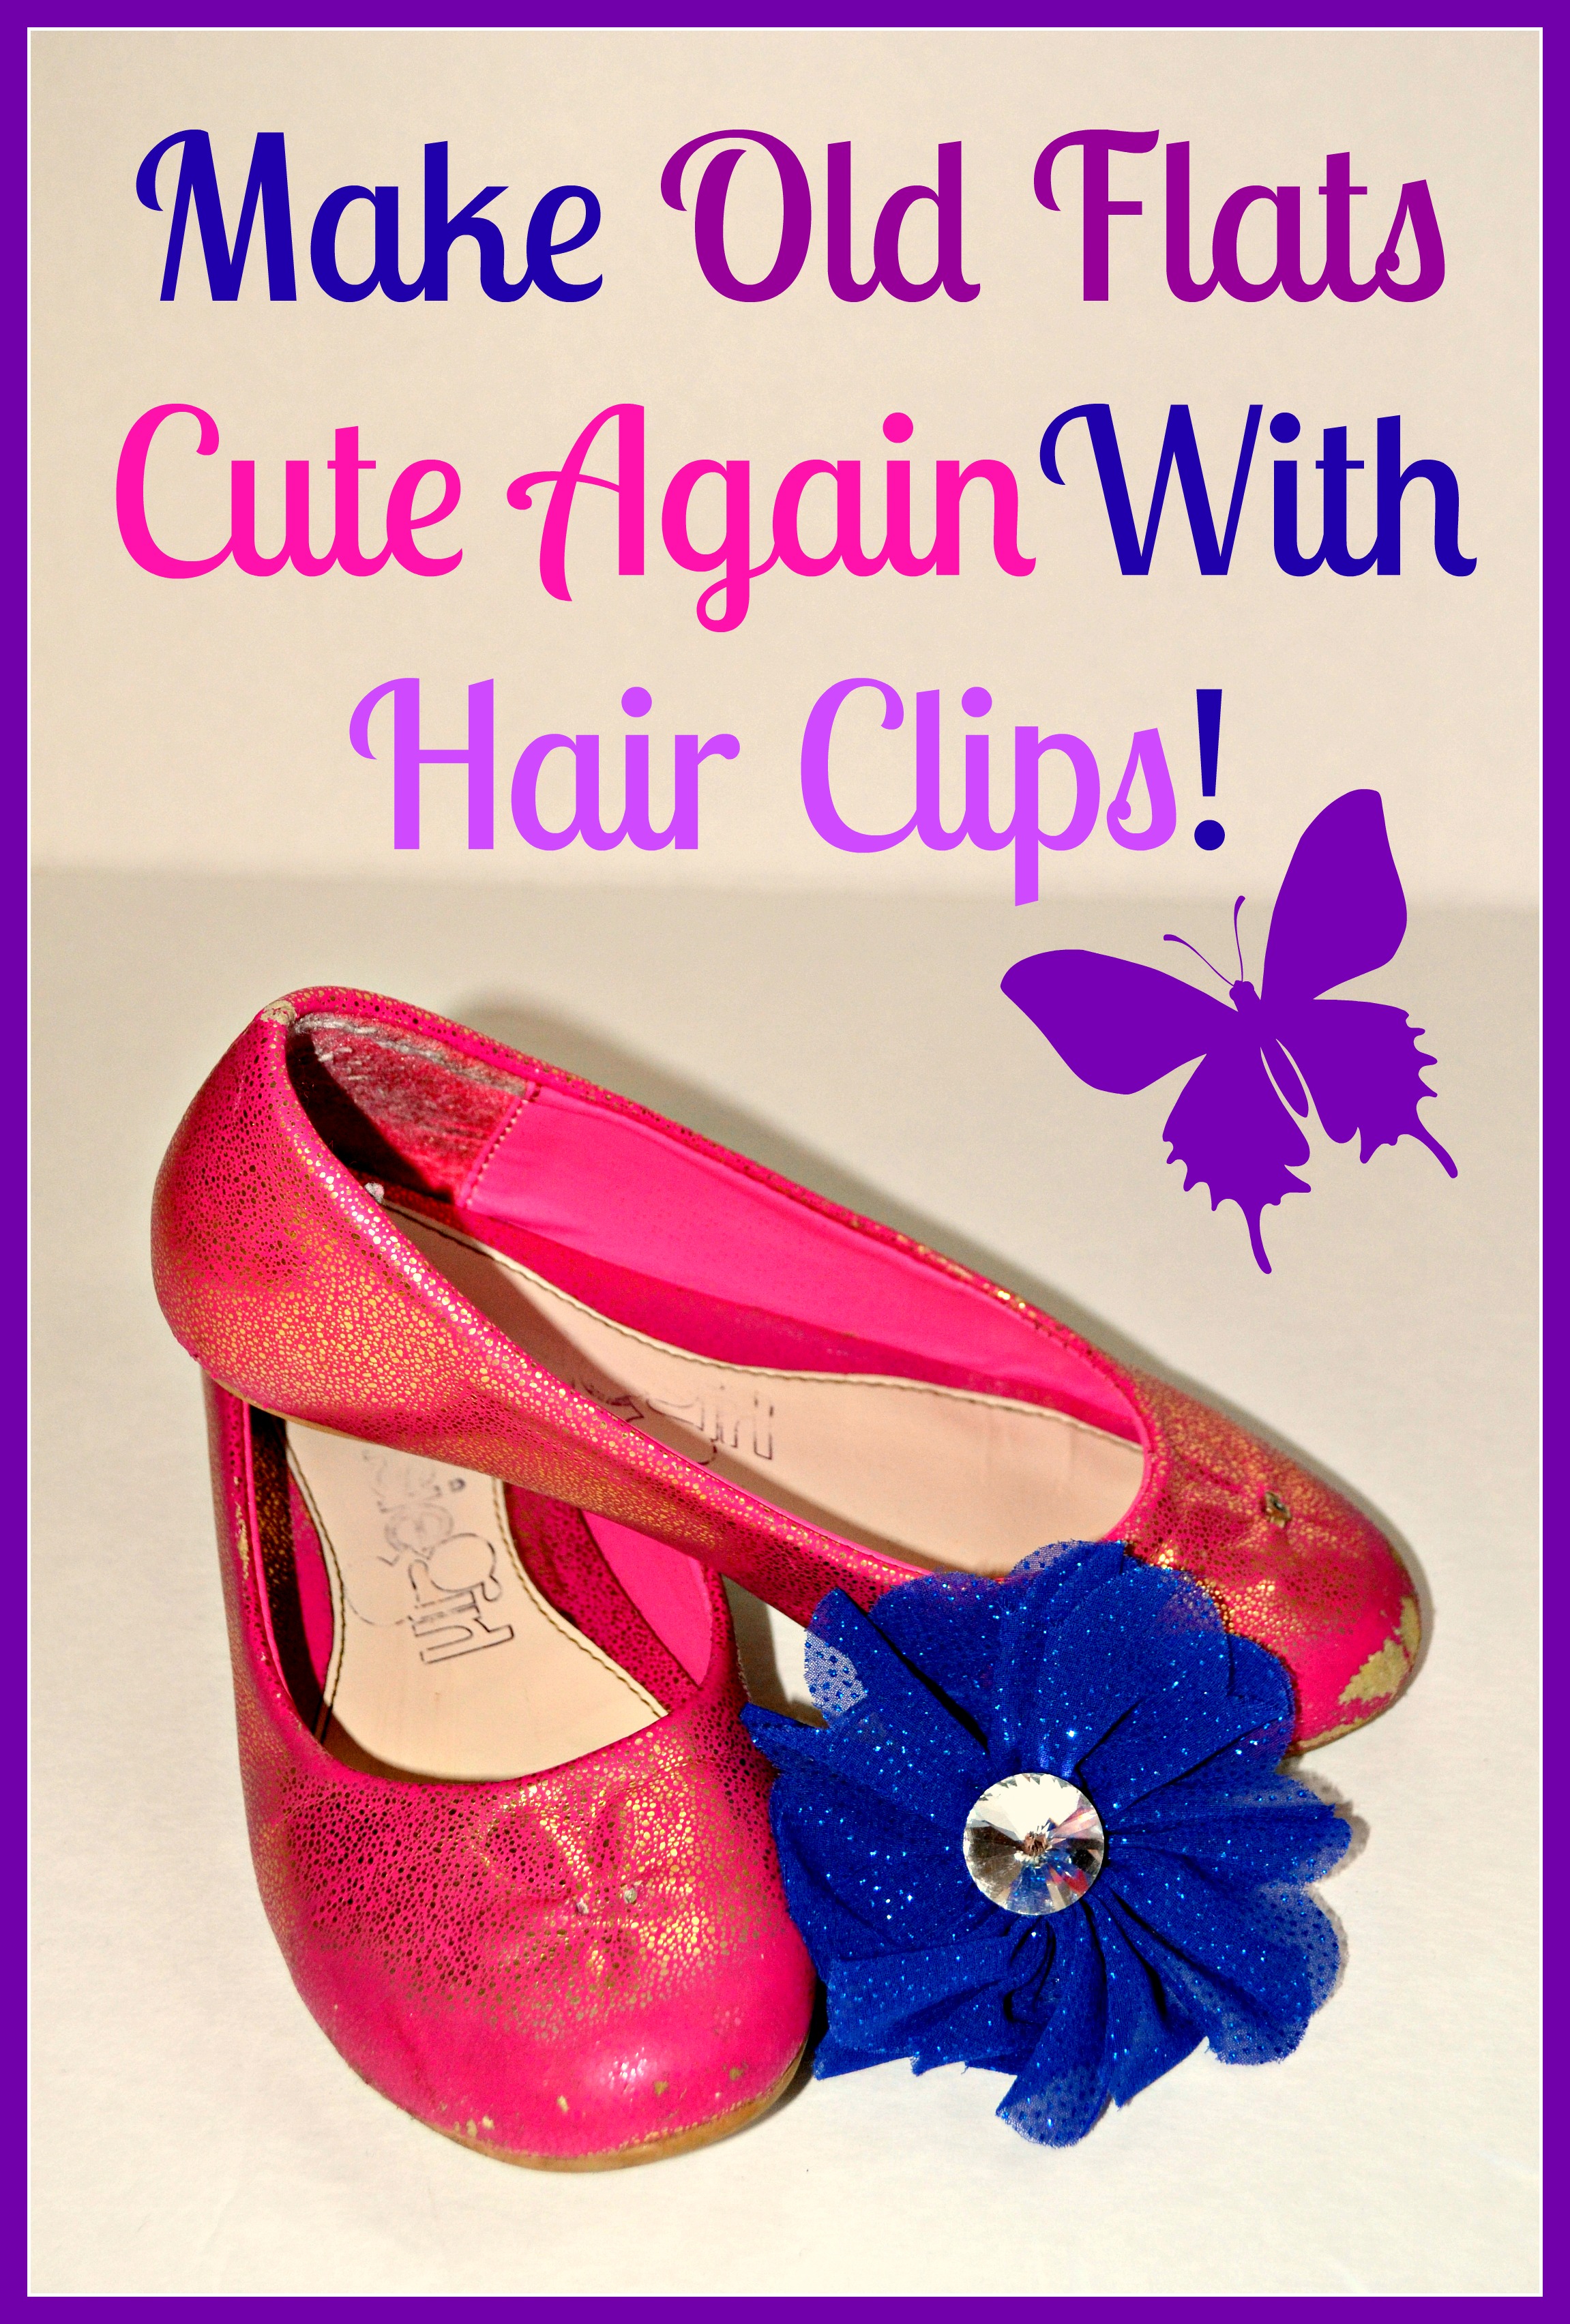 Make Old Flats Cute Again With Hair Clips!